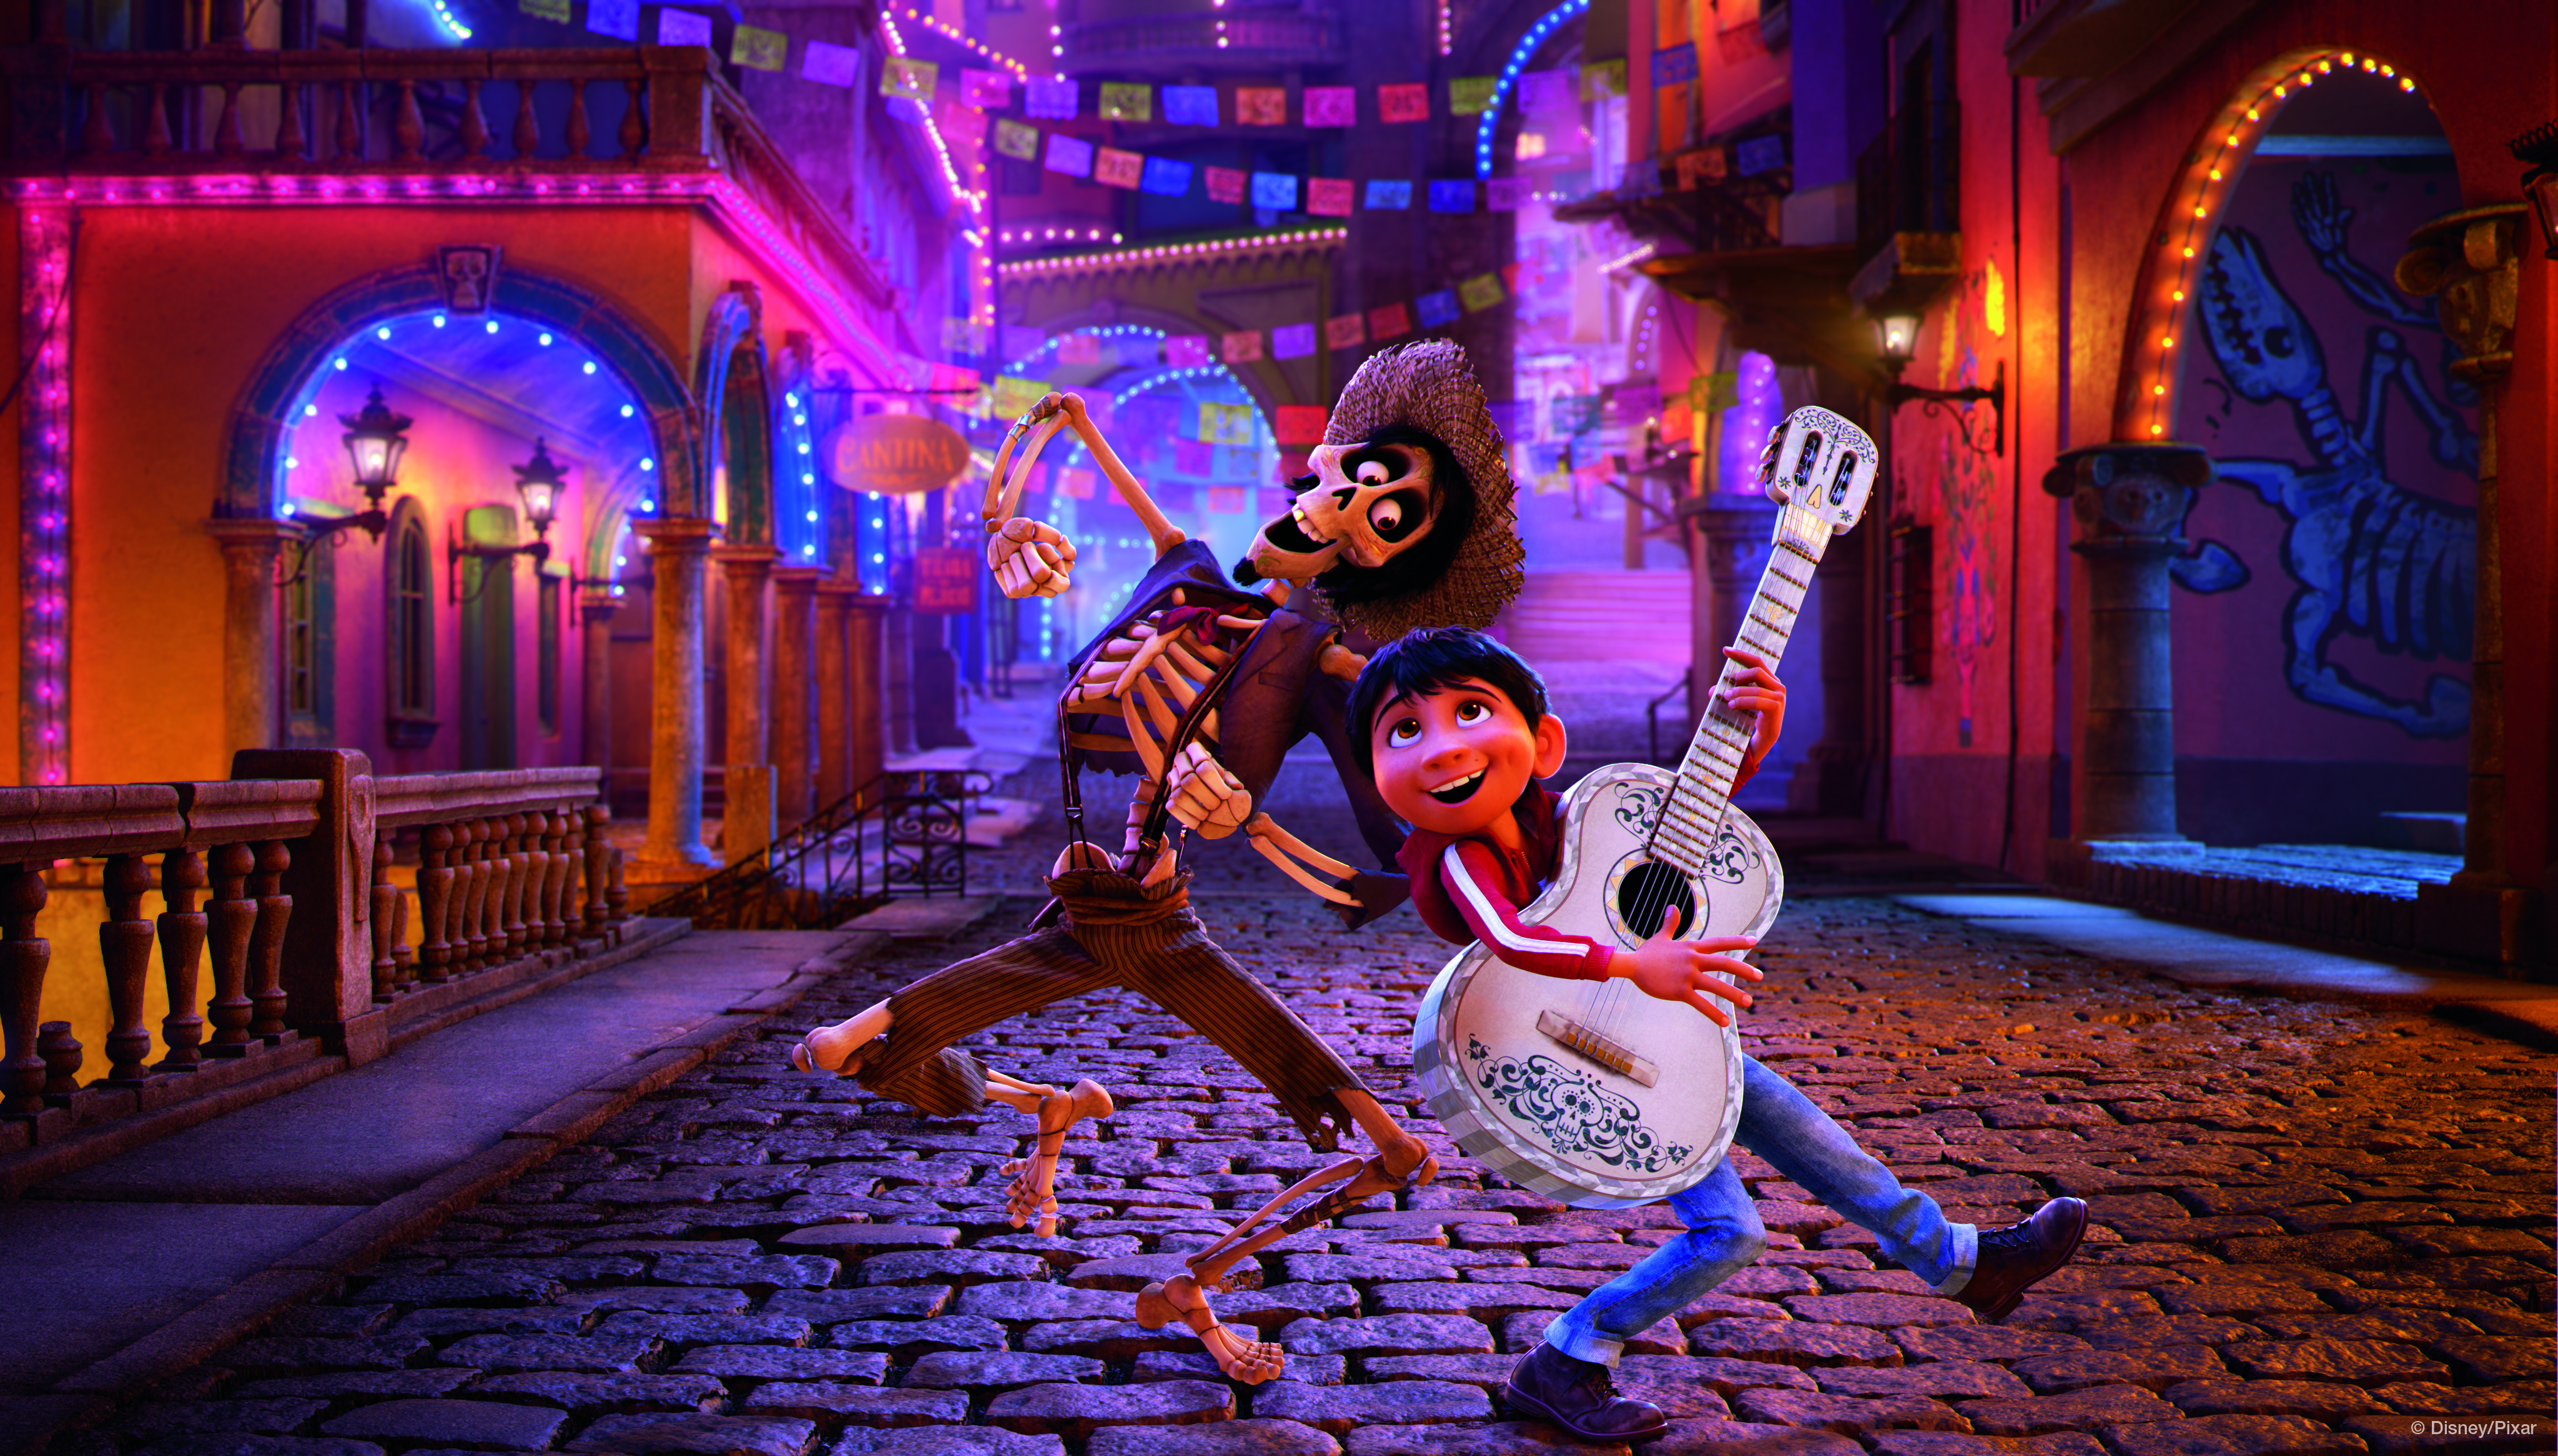 An image of Disney Pixar's Coco